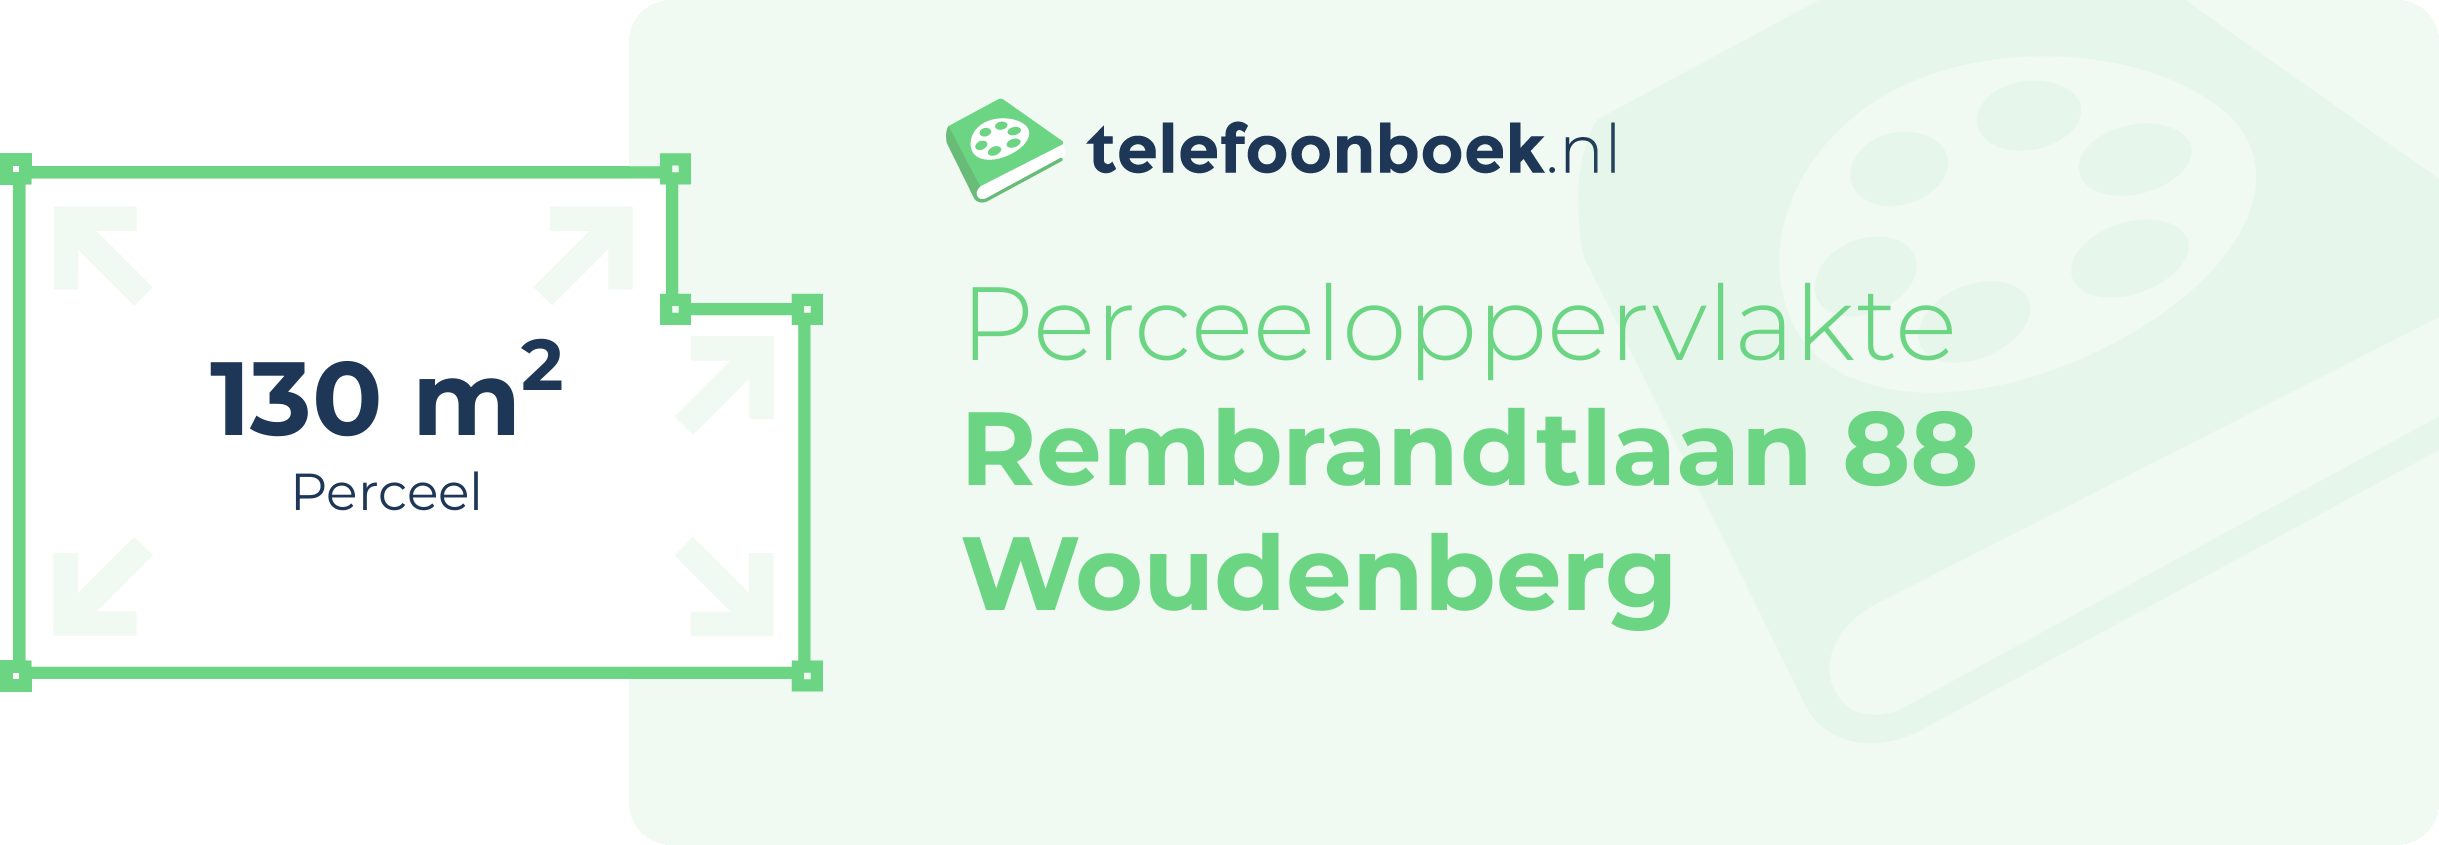 Perceeloppervlakte Rembrandtlaan 88 Woudenberg